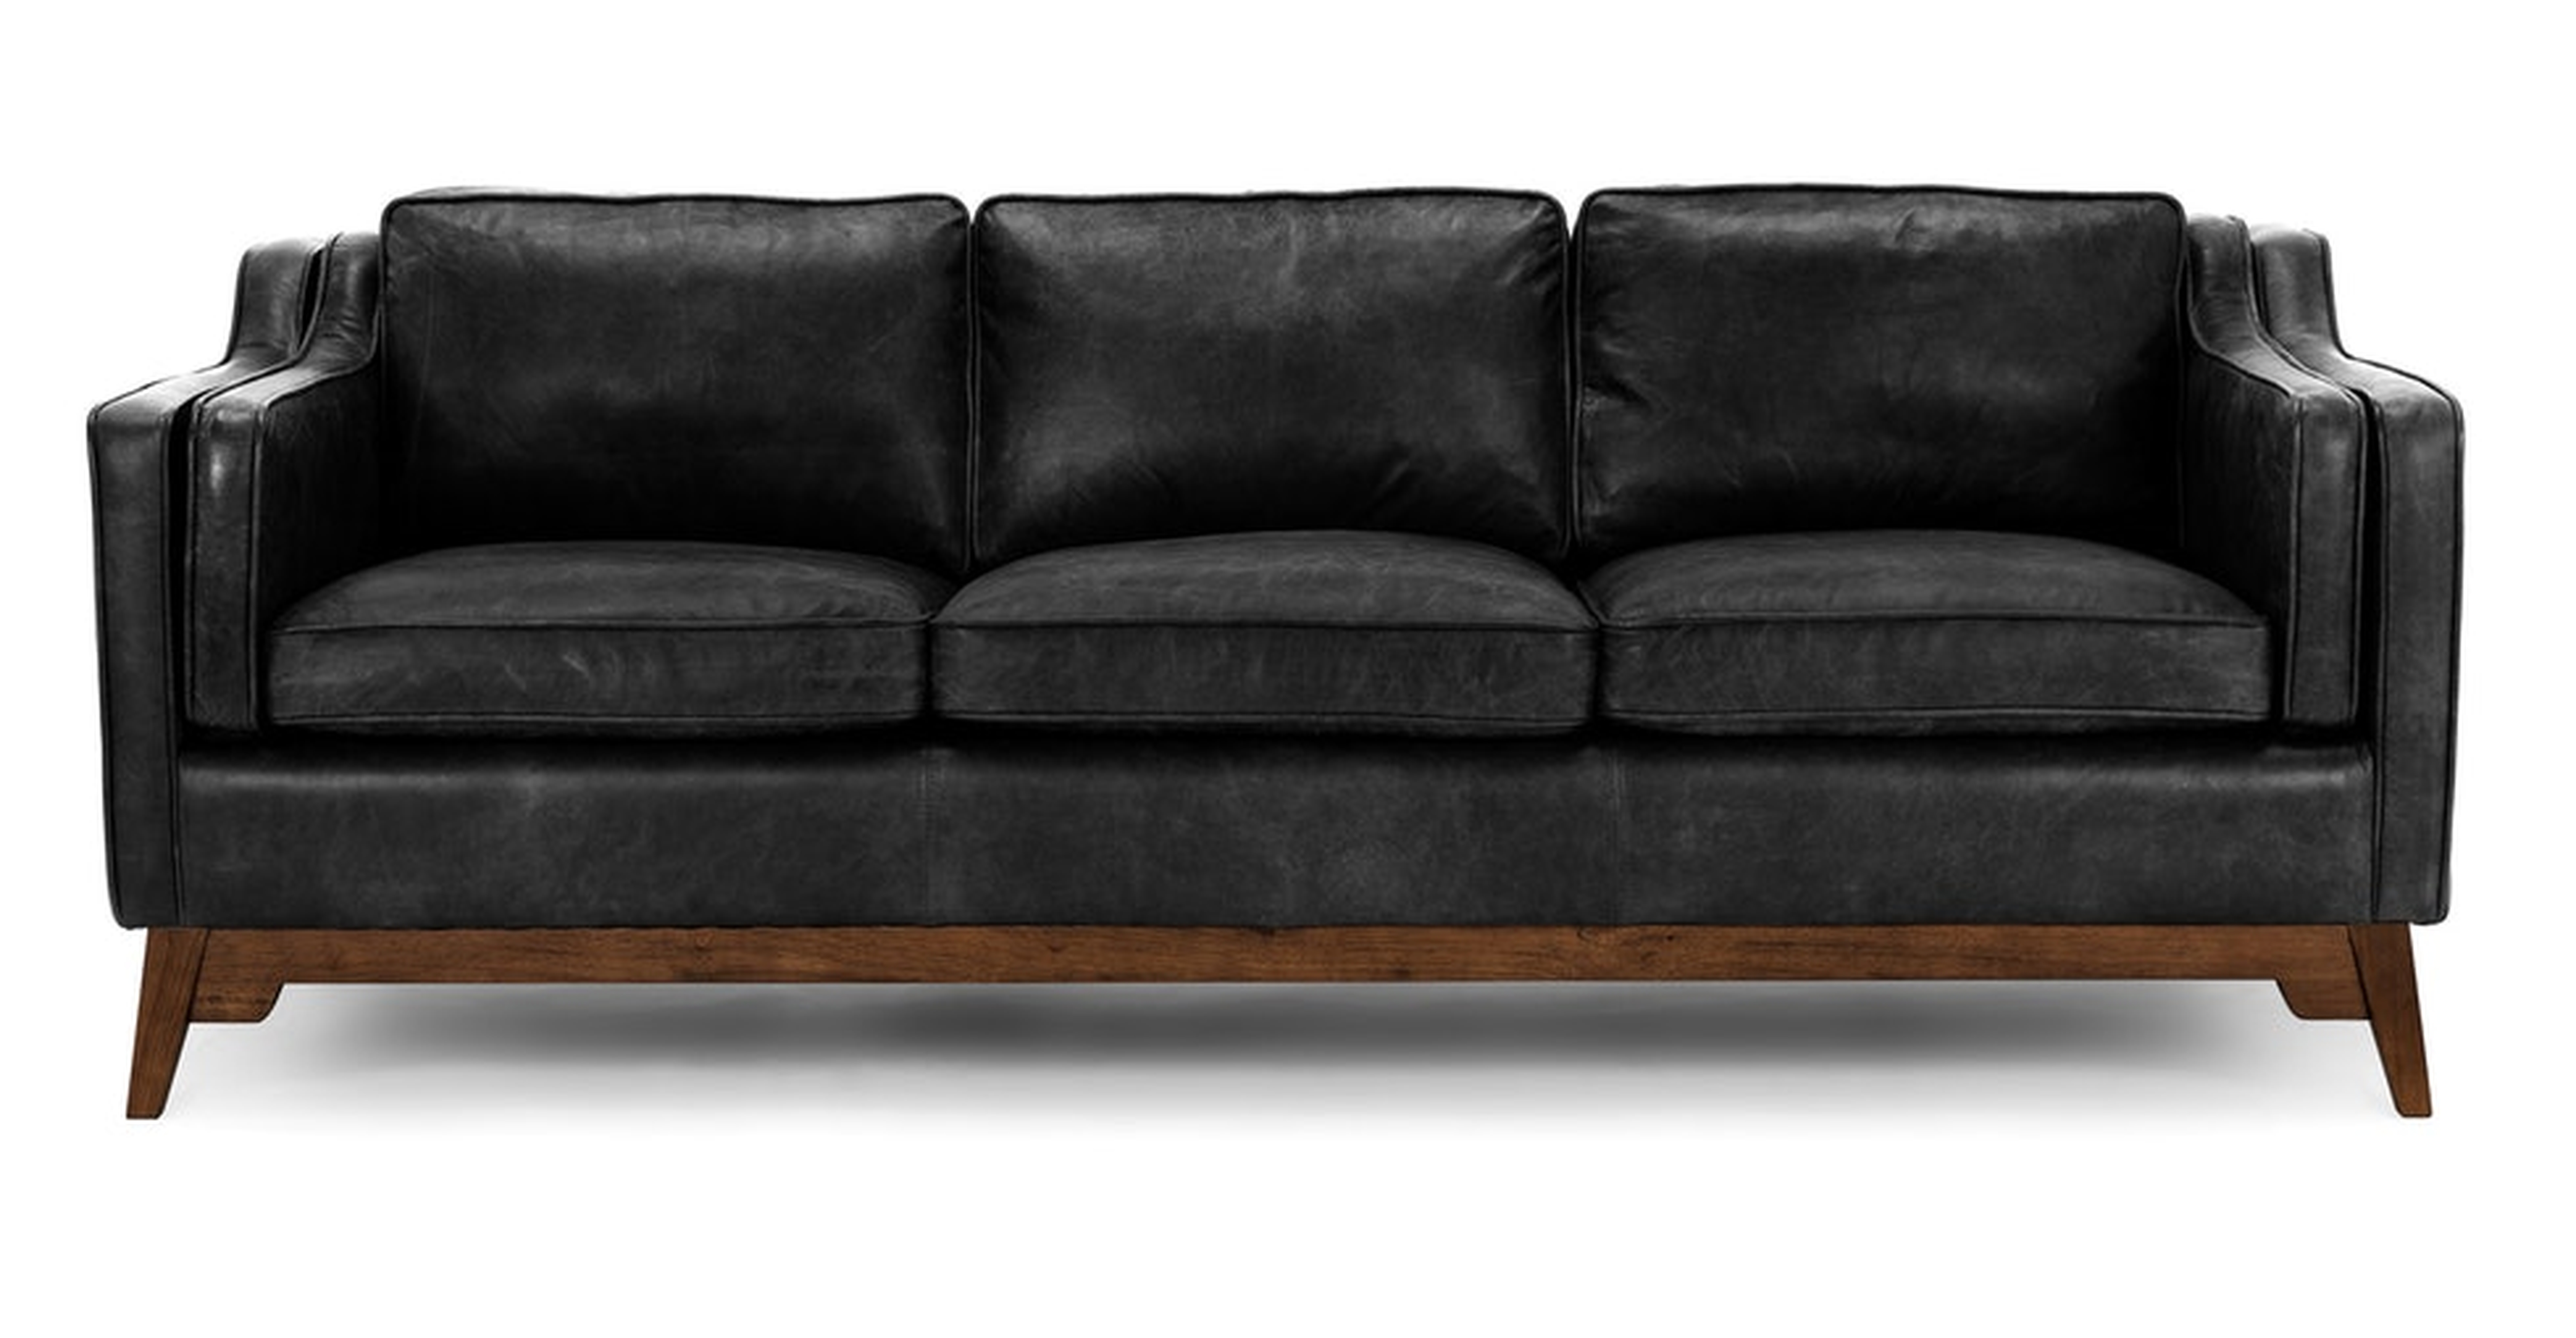 Worthington Oxford Black Sofa - Article